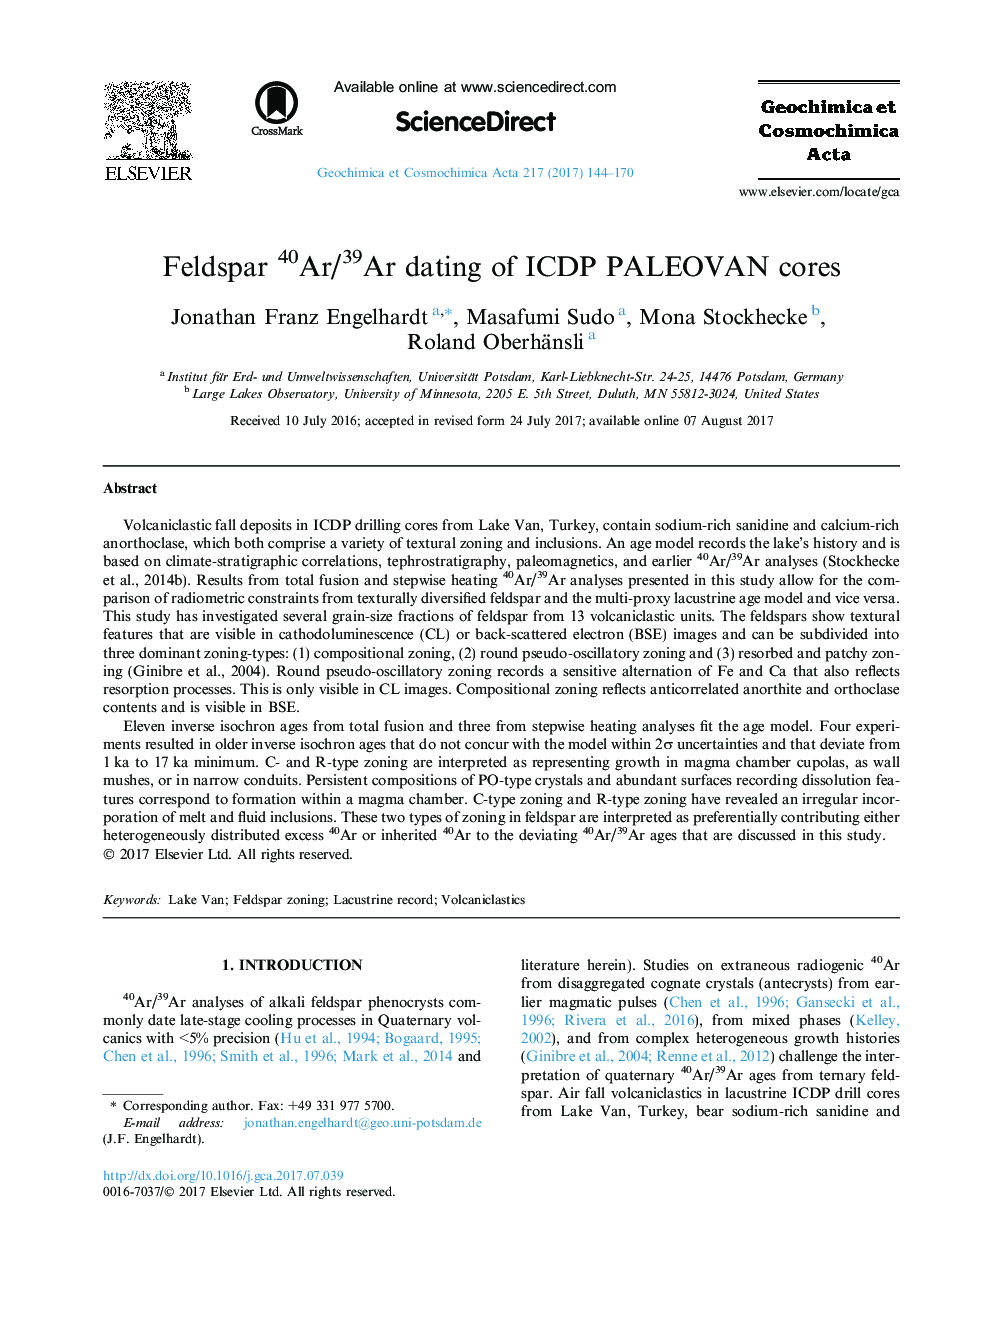 Feldspar 40Ar/39Ar dating of ICDP PALEOVAN cores